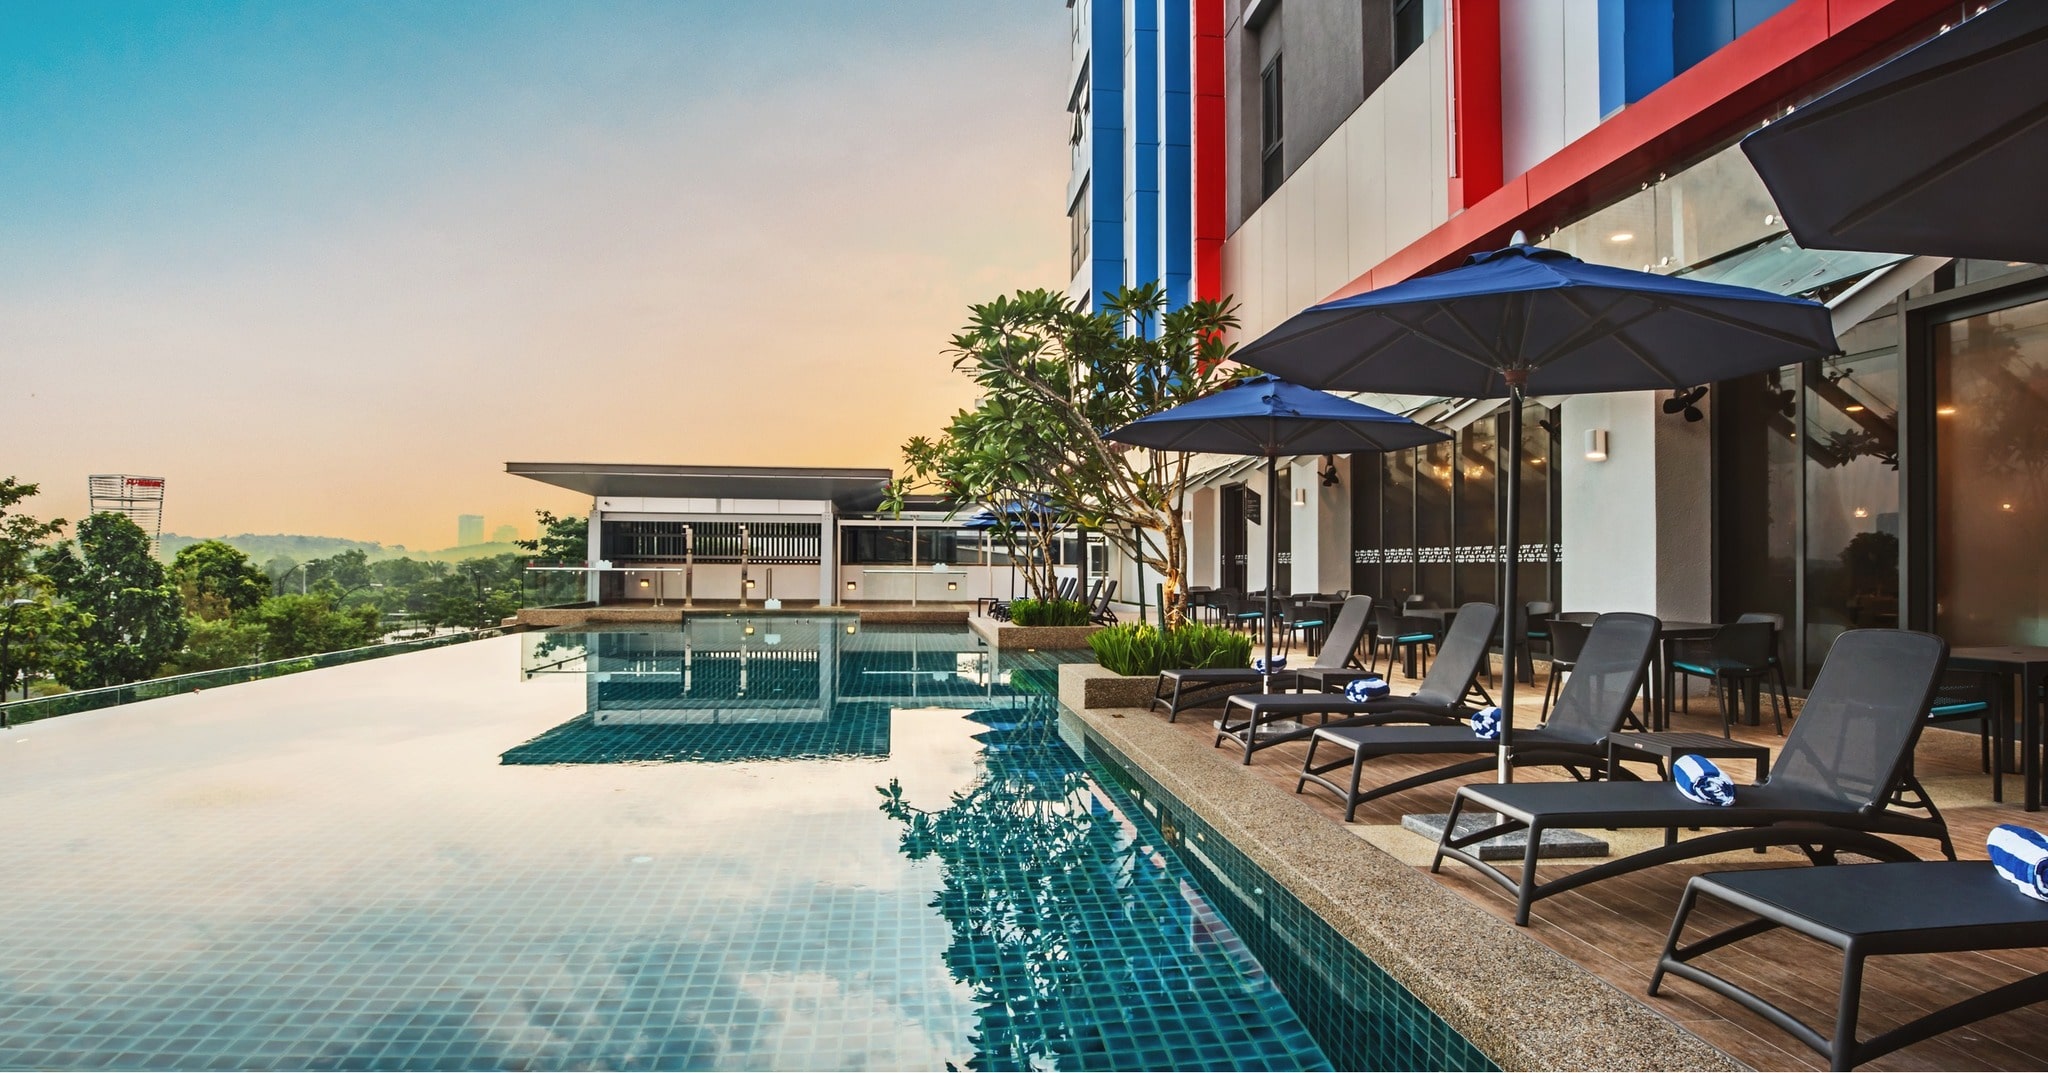 Hotels for families in Johor Bahru - Sunway Hotel Big Box